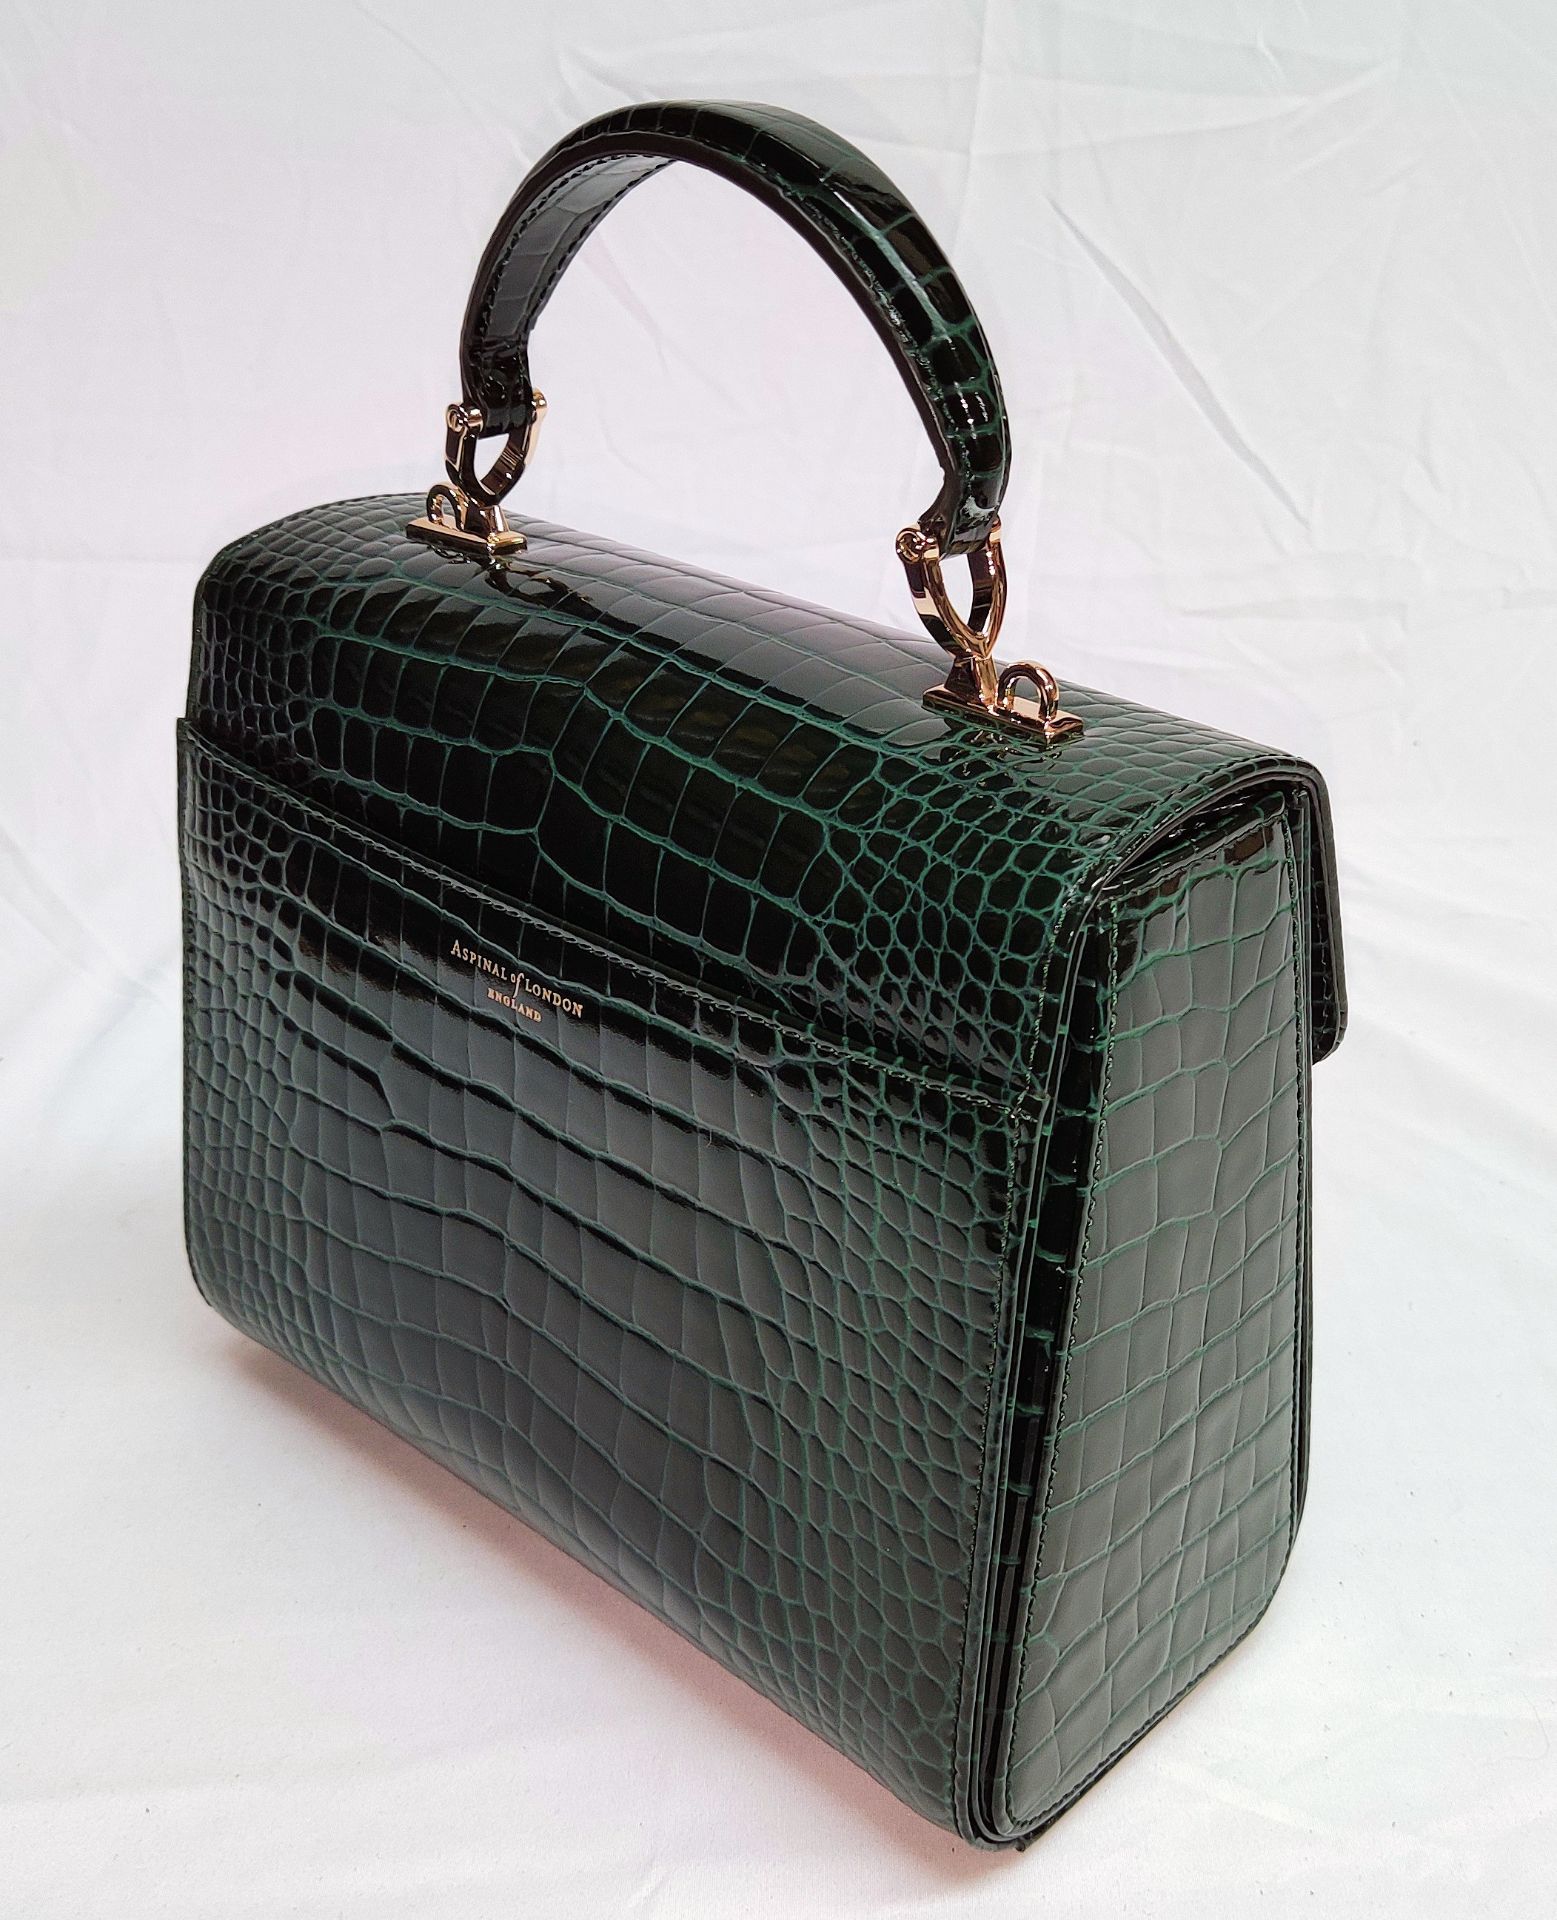 1 x ASPINAL OF LONDON Mayfair Bag - Evergreen Patent Croc - Original RRP £695.00 - Image 9 of 23